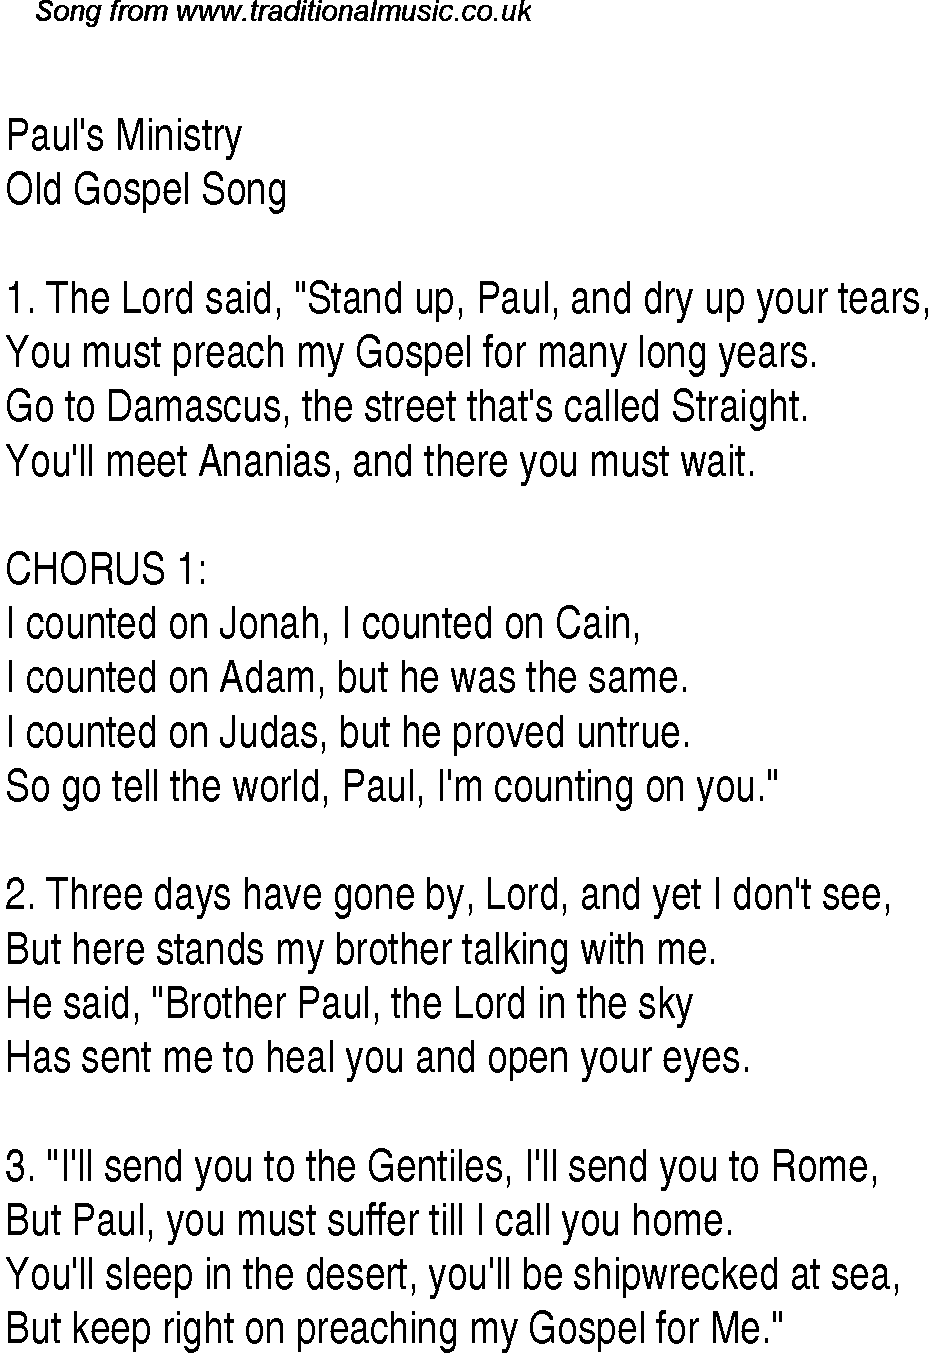 Gospel Song: paul's-ministry, lyrics and chords.